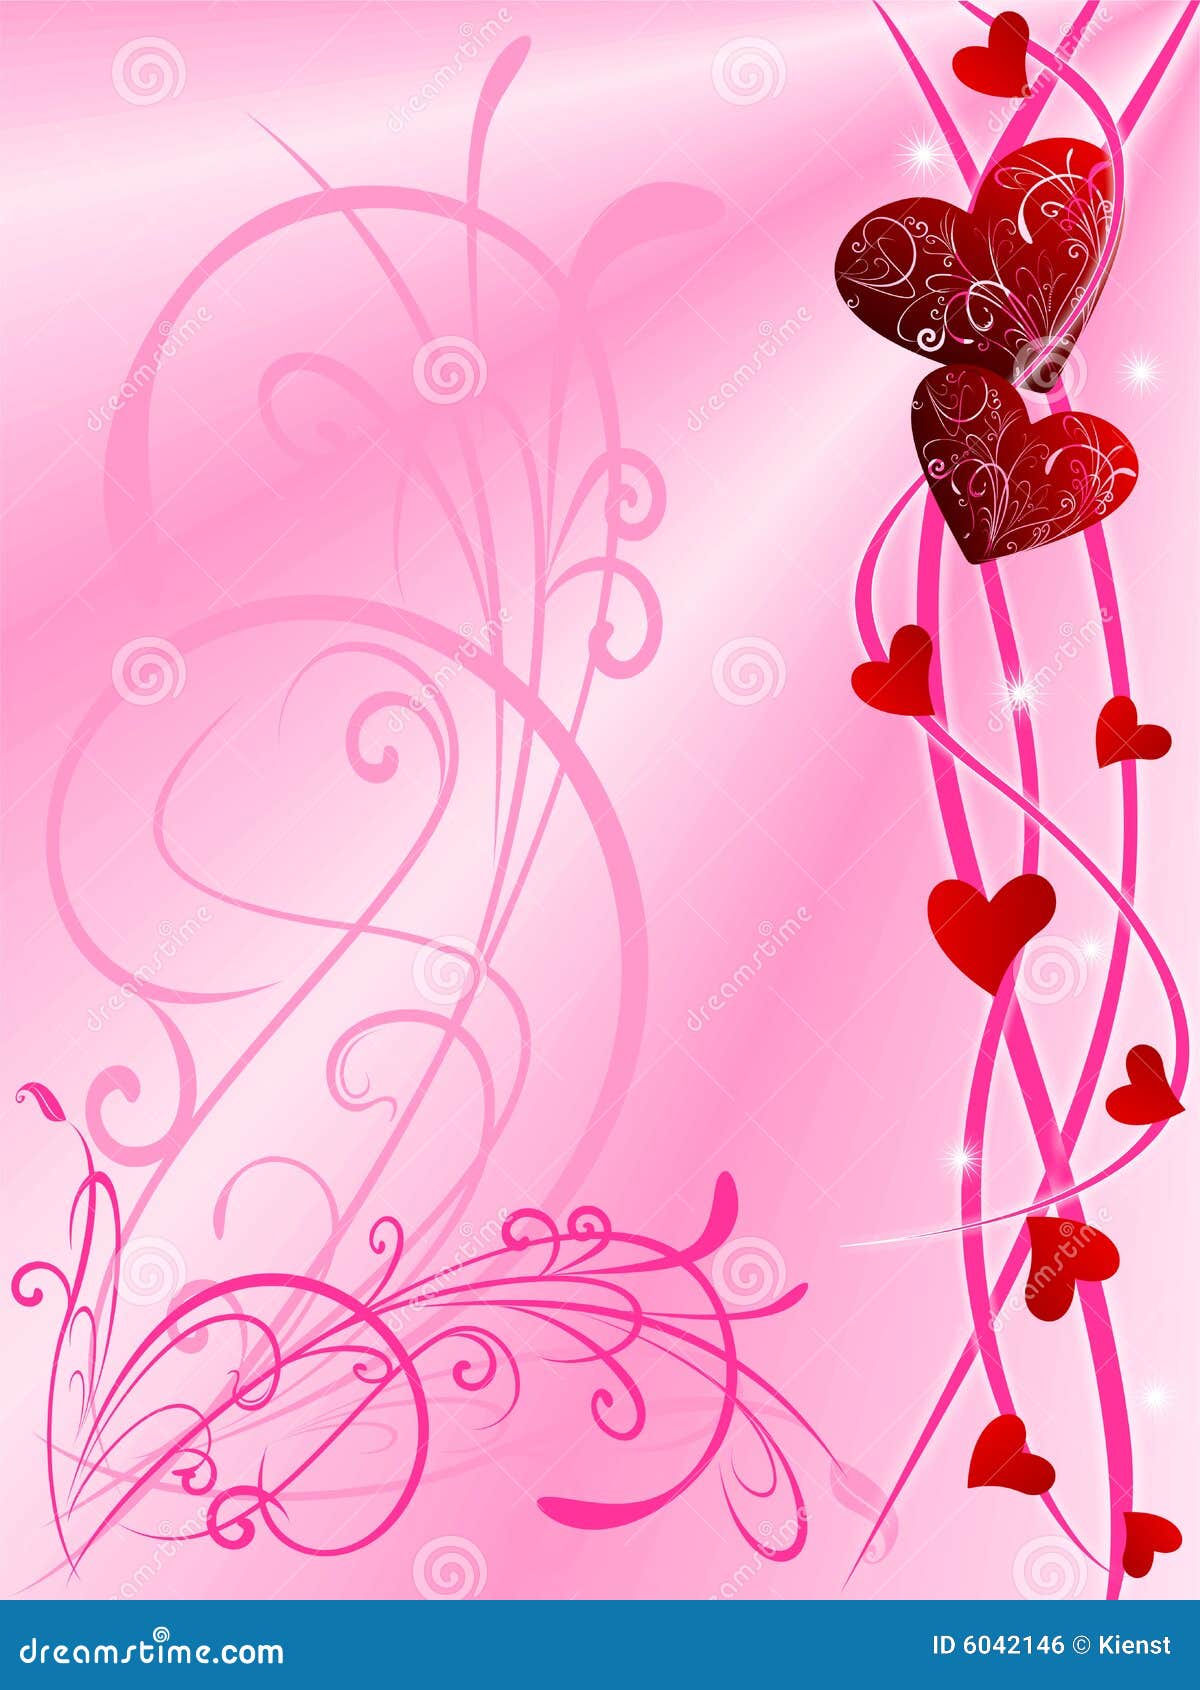 Love background stock vector. Illustration of designer - 6042146